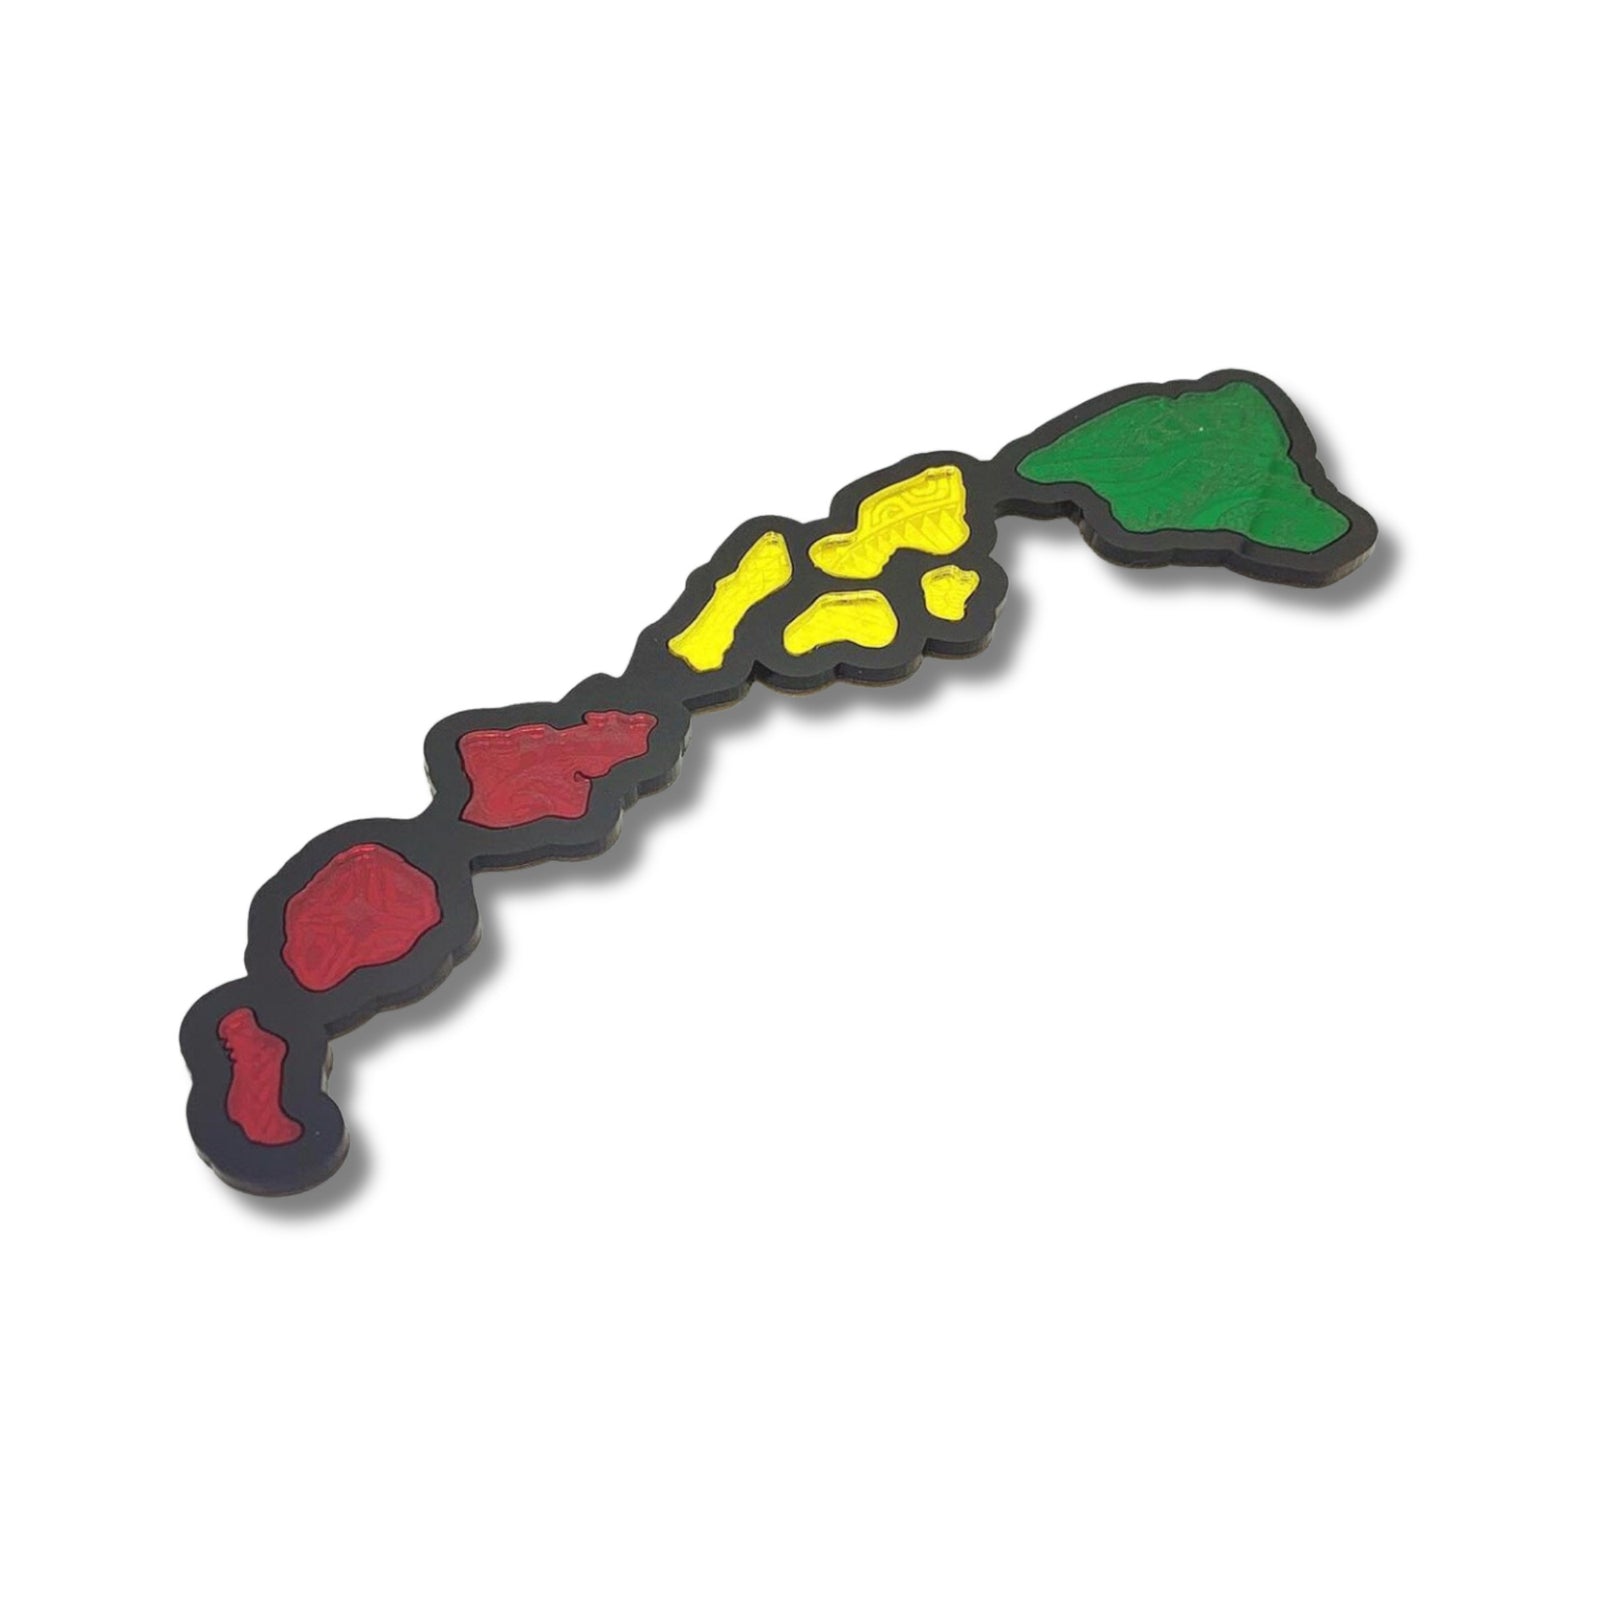 Pop-Up Mākeke - Island Silver - Engraved Rasta Island Chain Acrylic Emblem